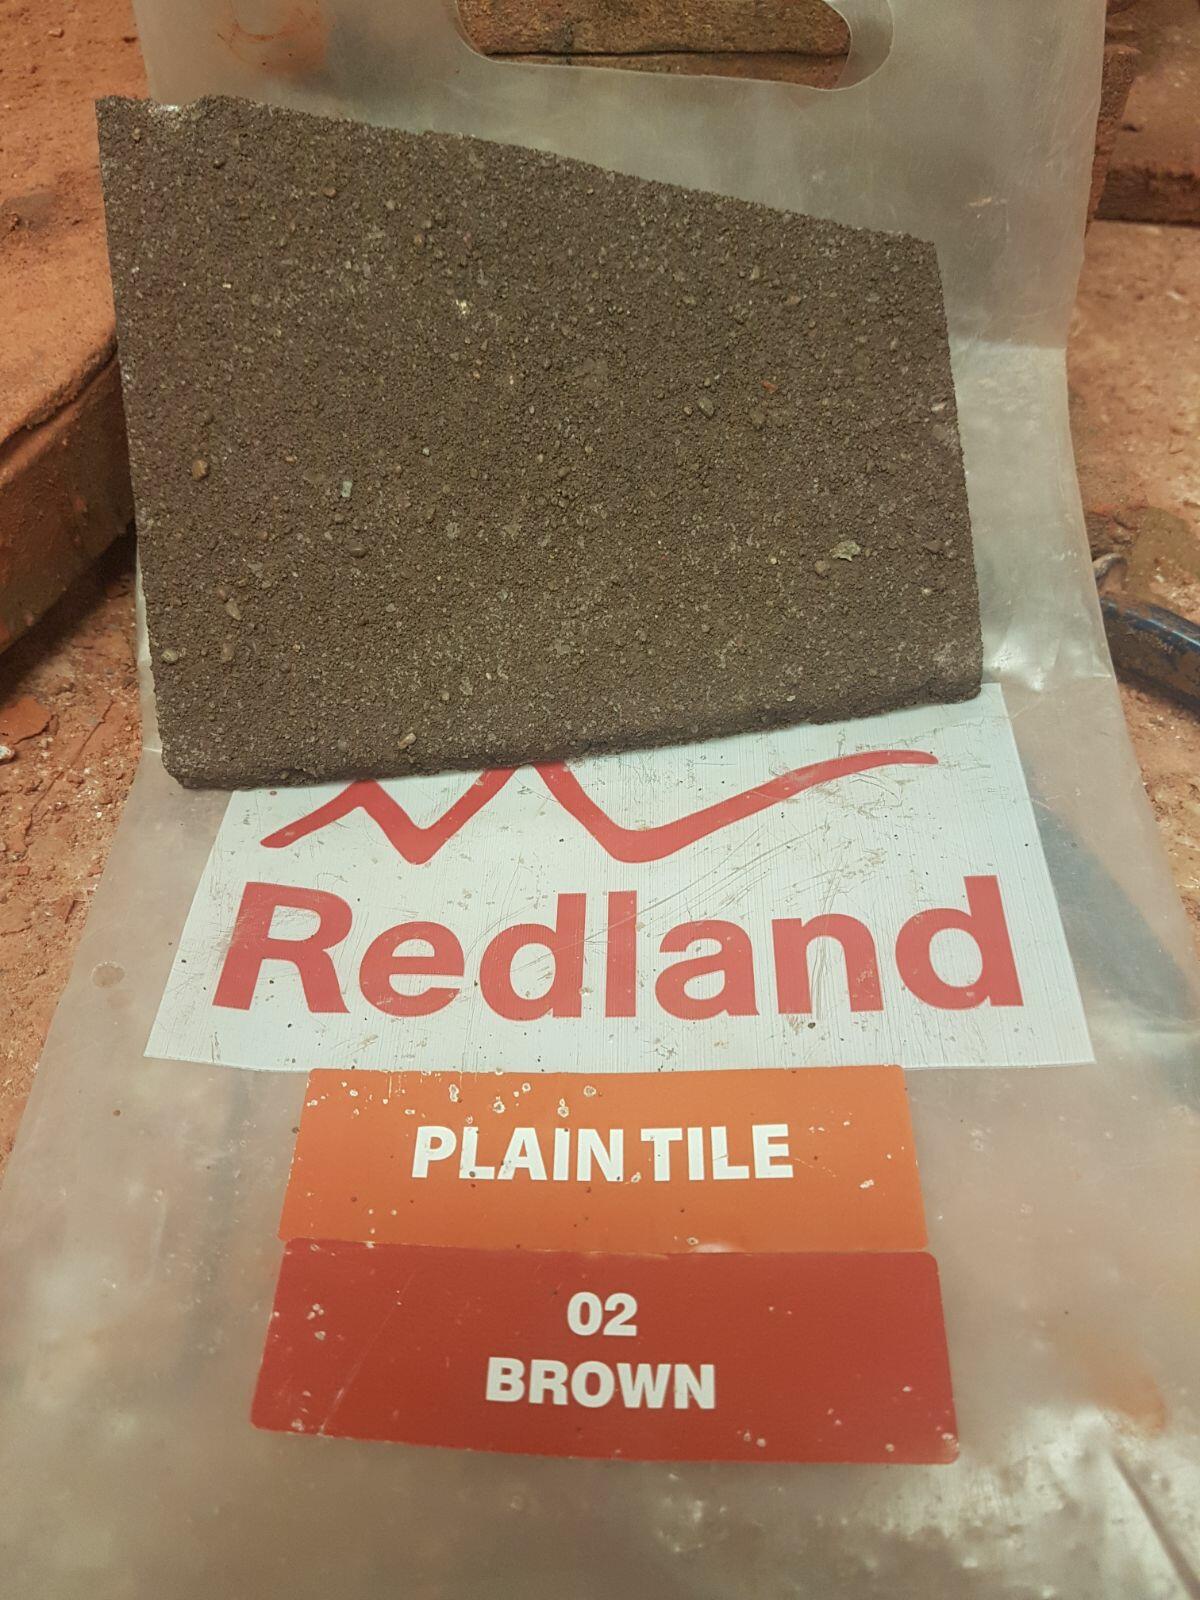 Redland granular brown tiles